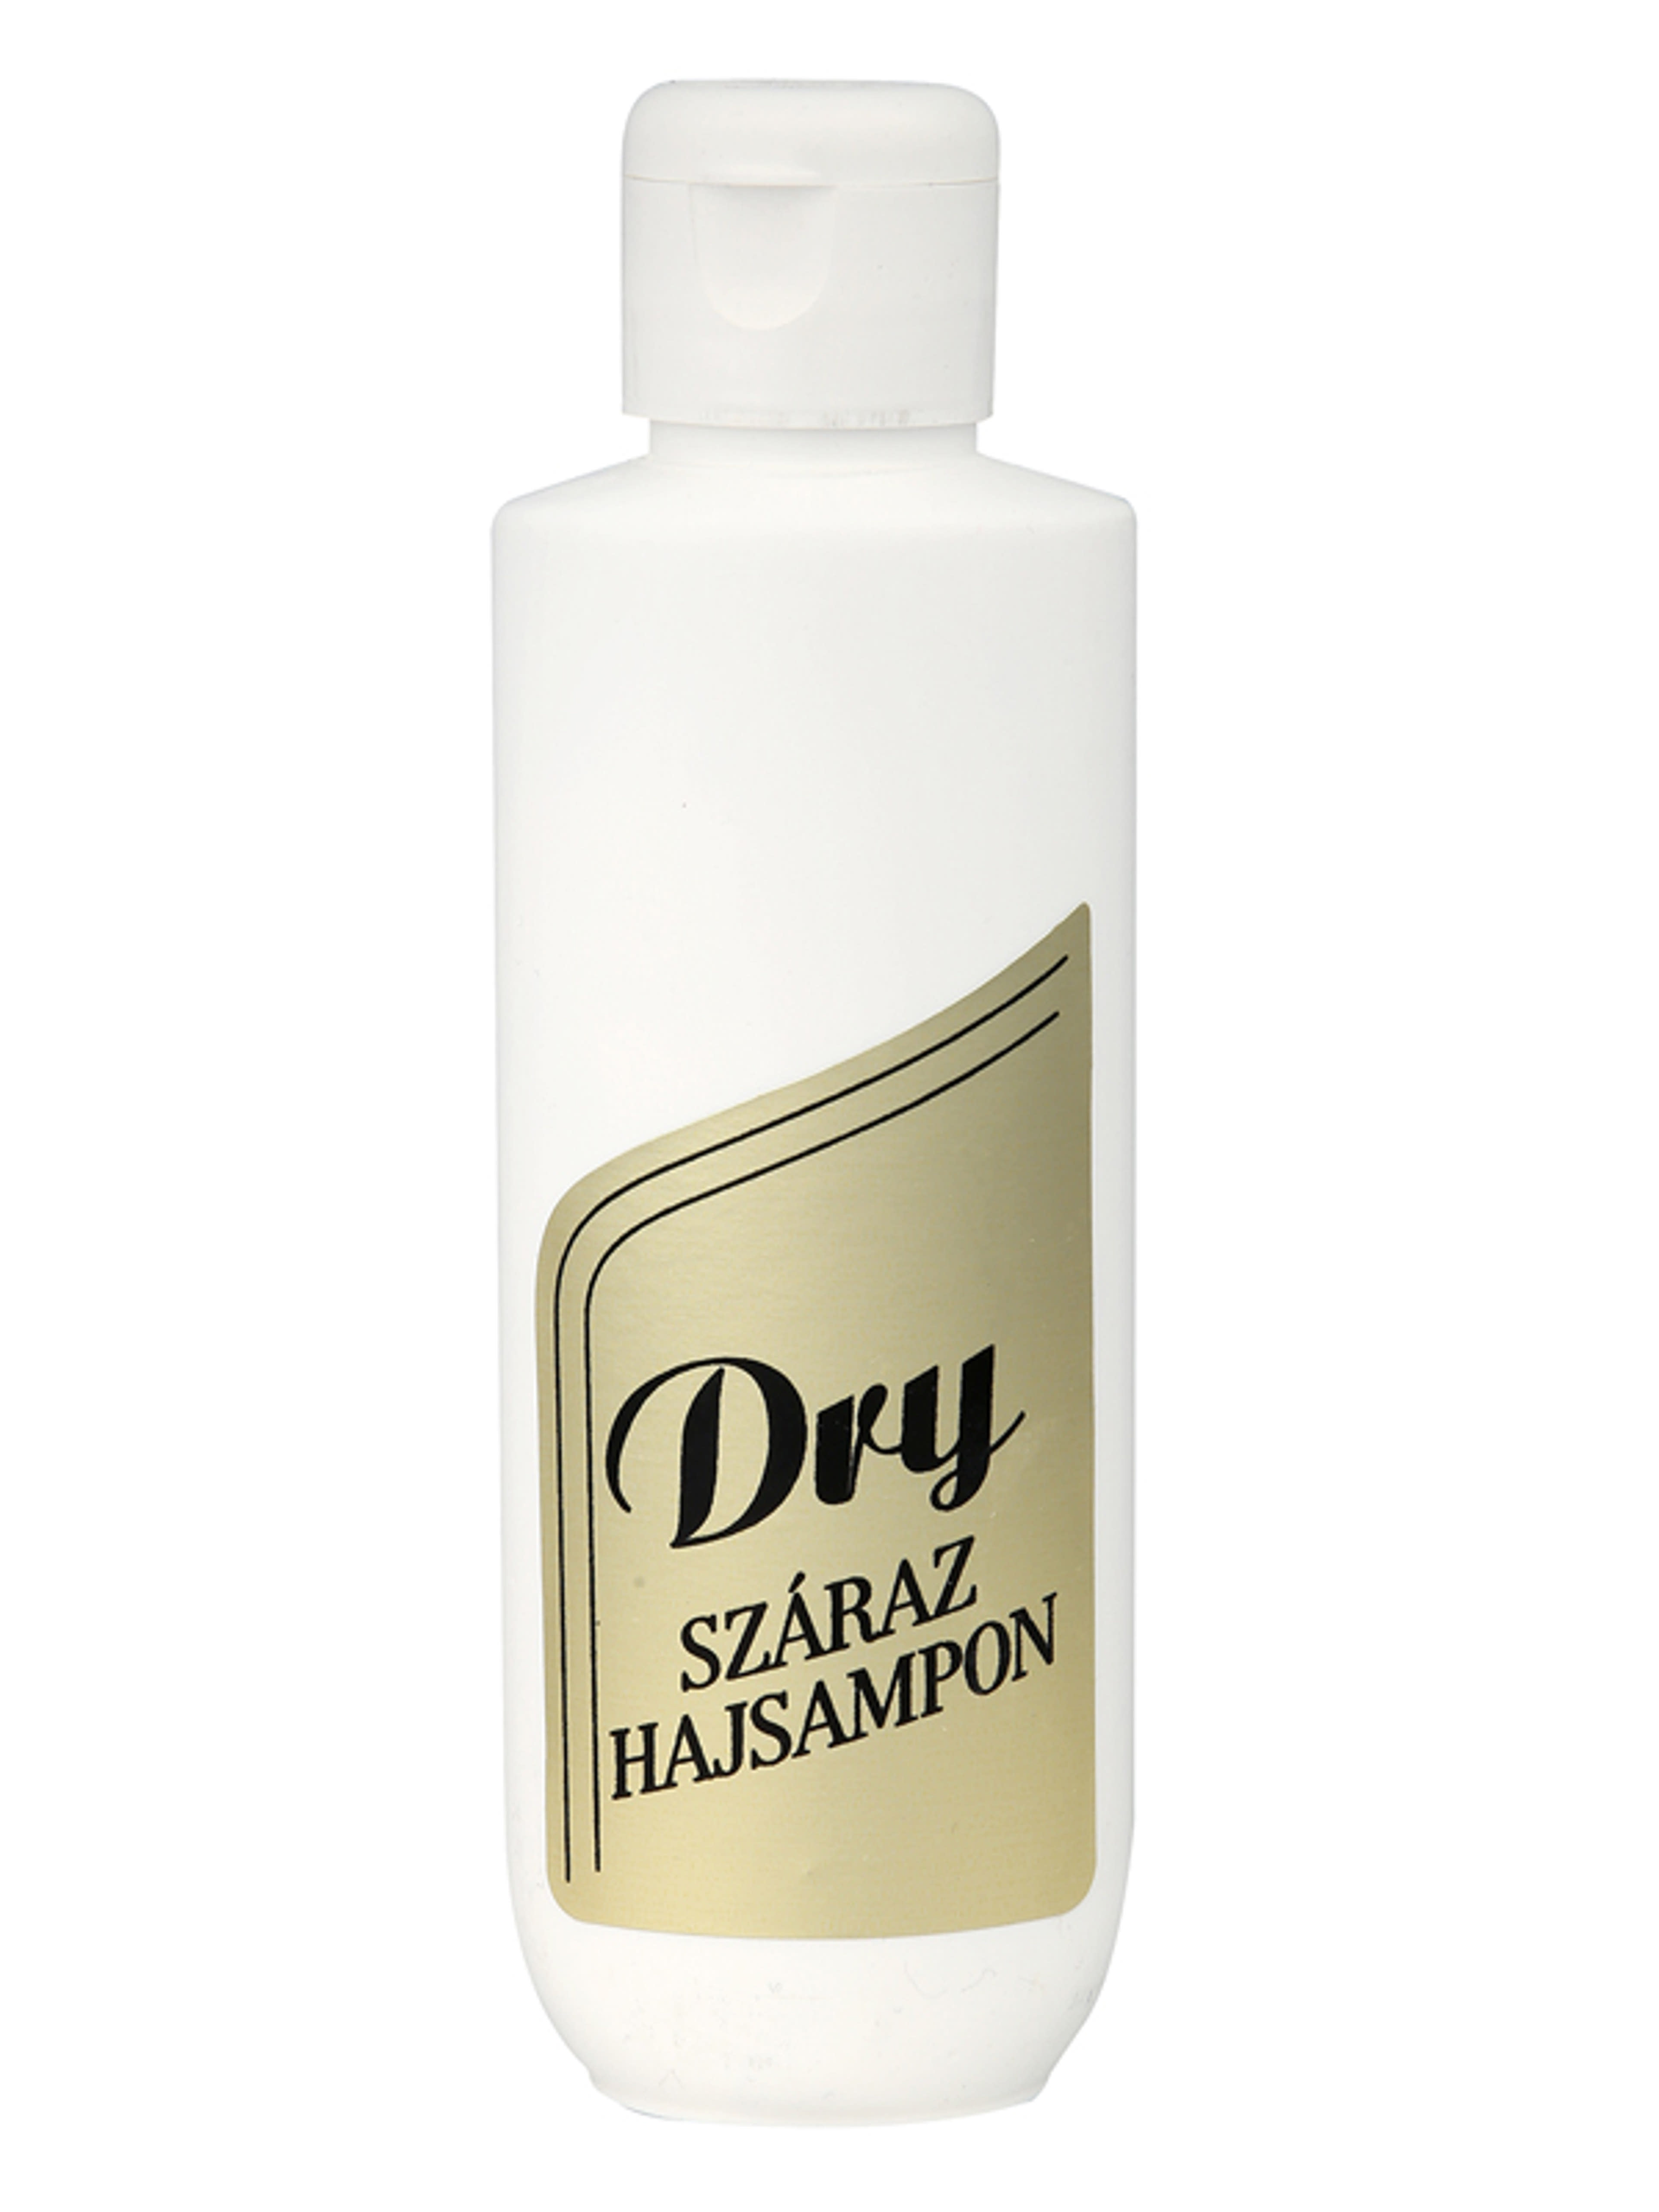 Dry Szárazsampon - 50 g-1